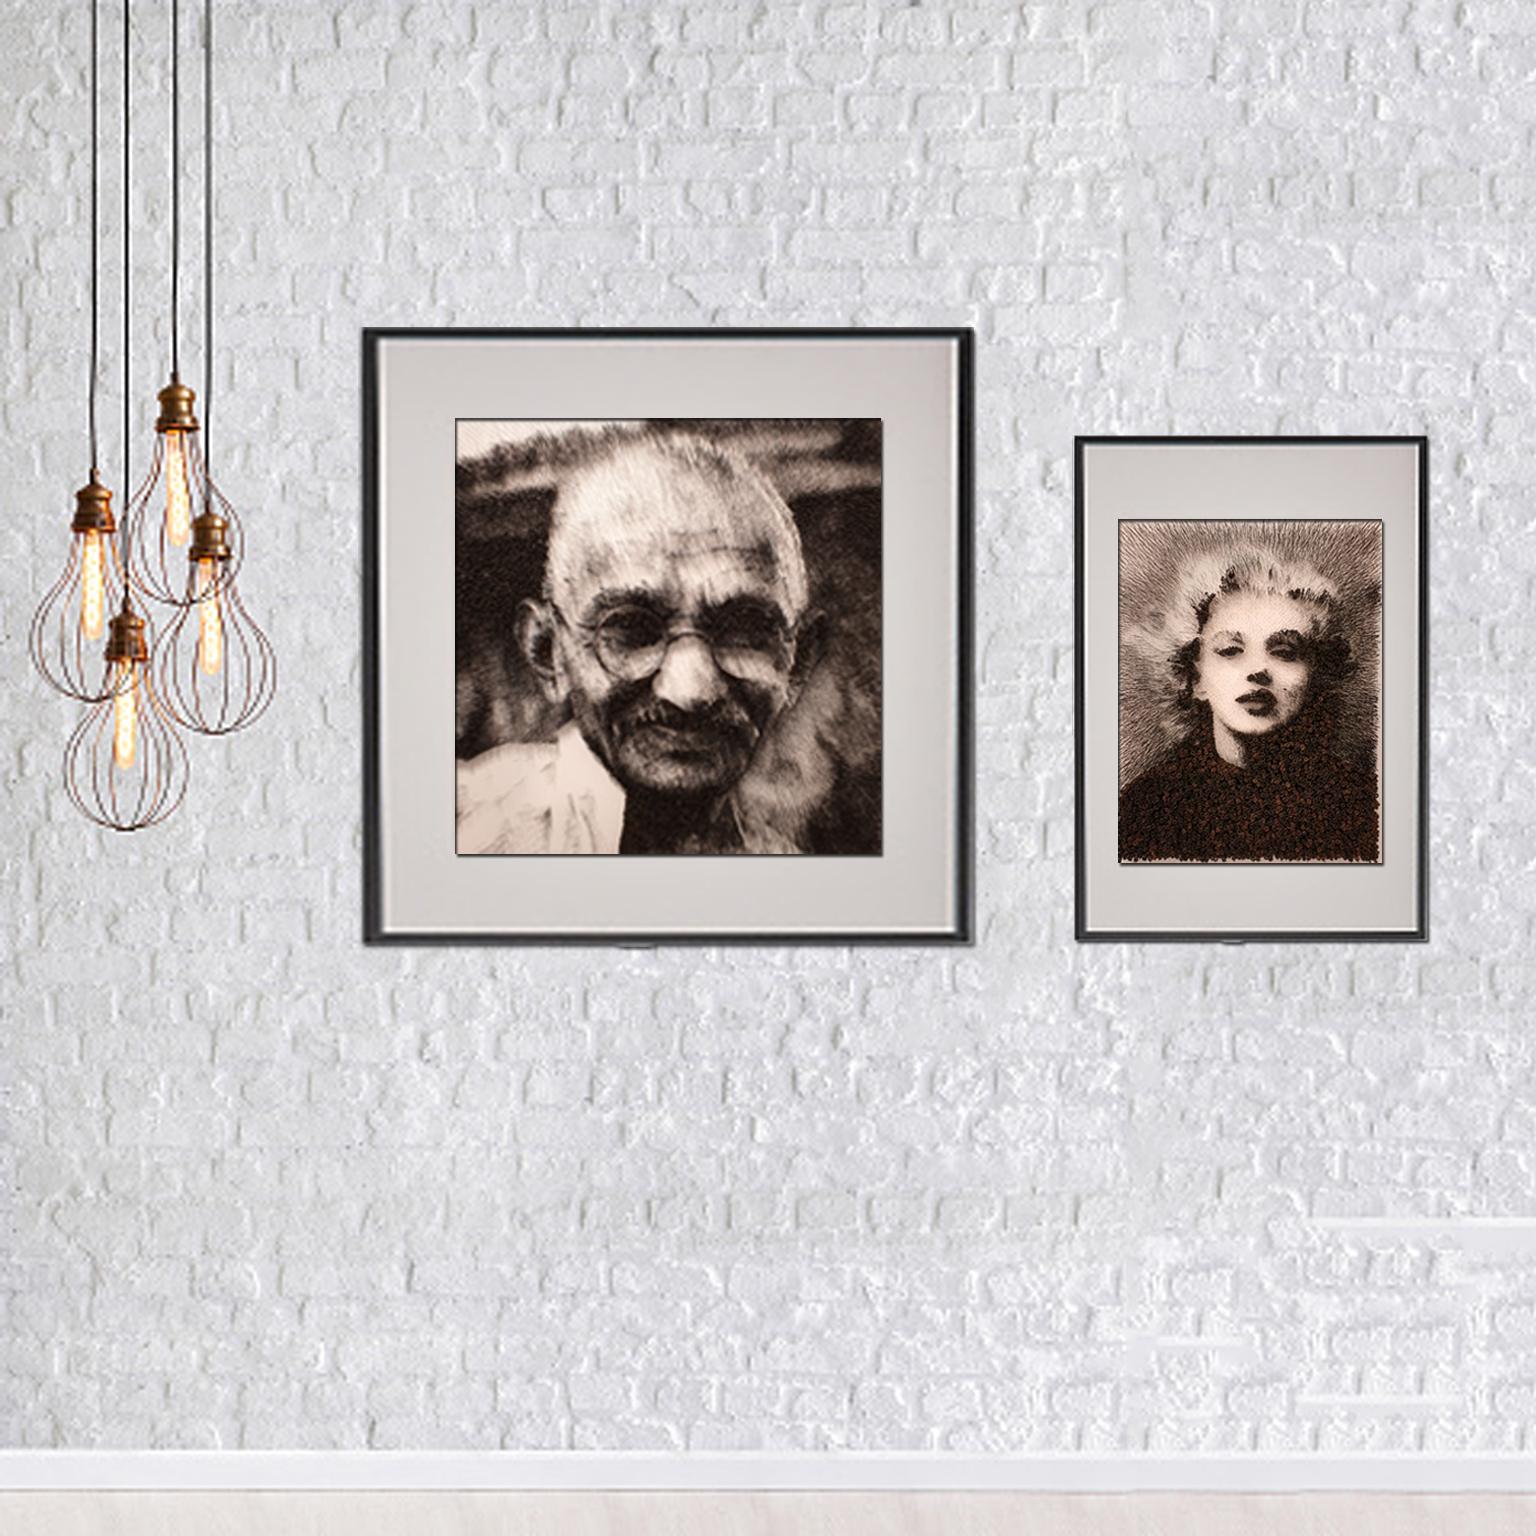 Mohandas Gandhi[Black&White, Steel on canvas, Stereoscopic, Portrait, New media] - New Media Mixed Media Art by Kim Yong Jin